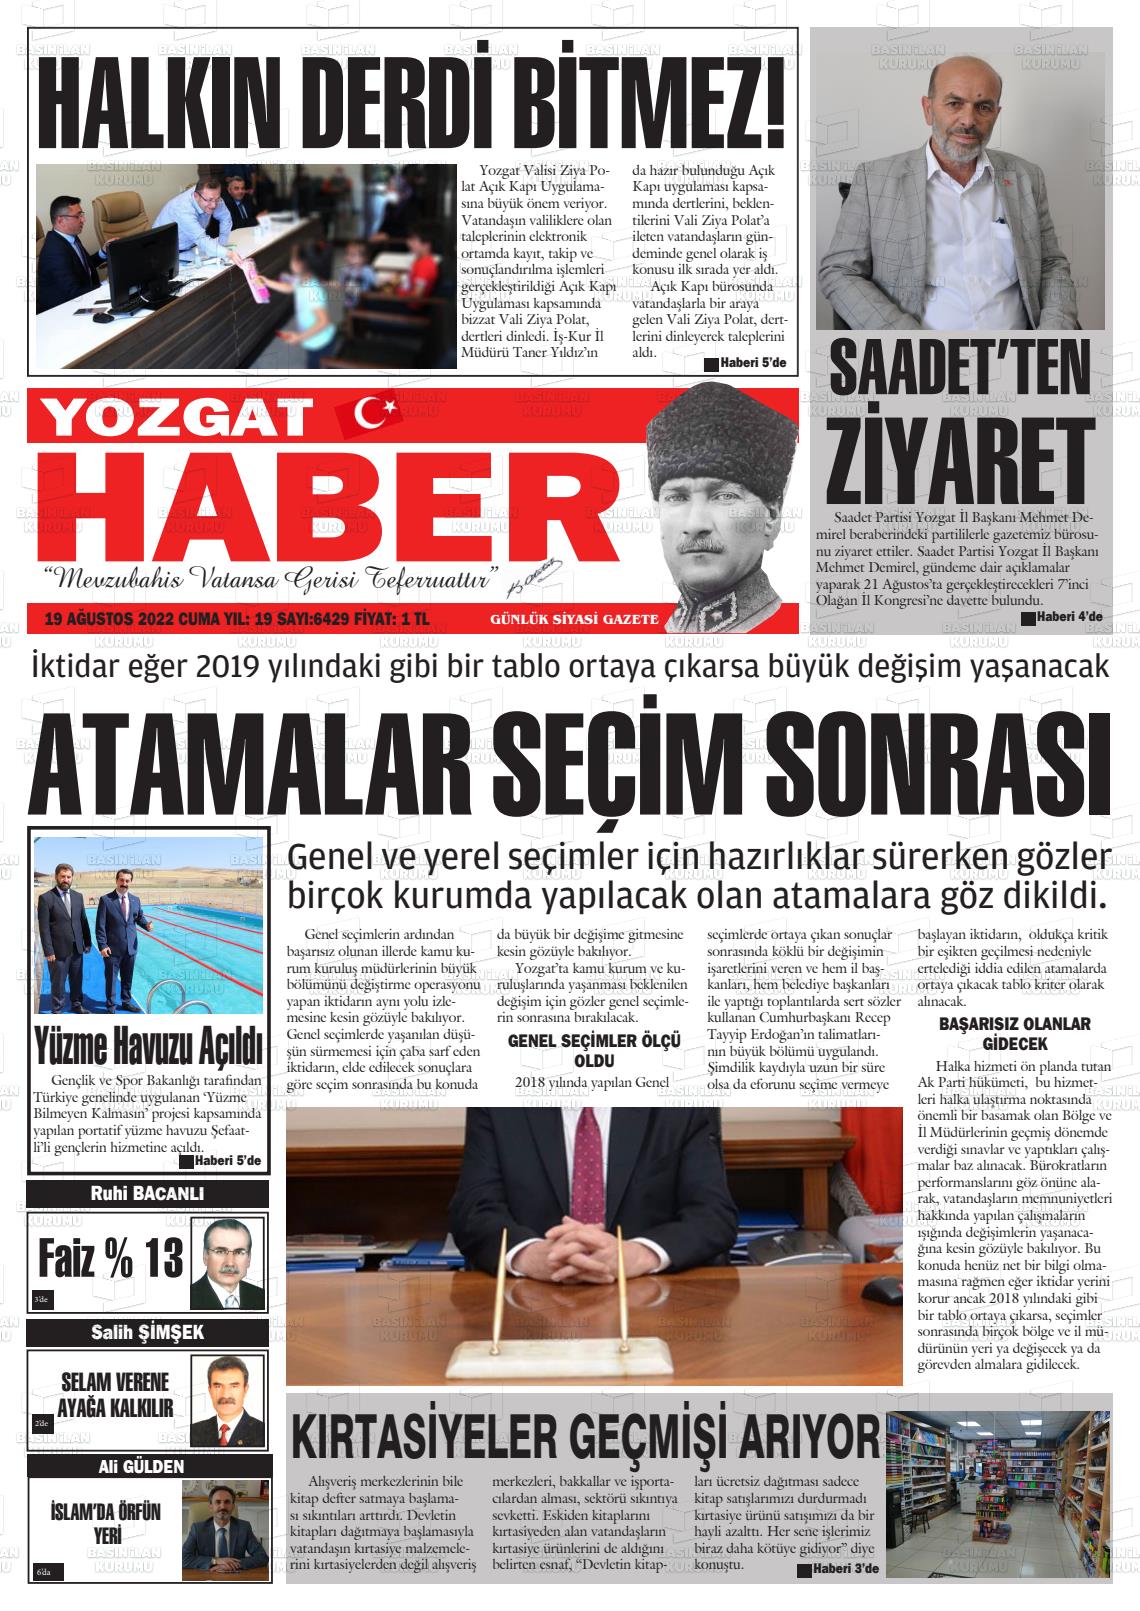 19 Ağustos 2022 Yozgat Haber Gazete Manşeti